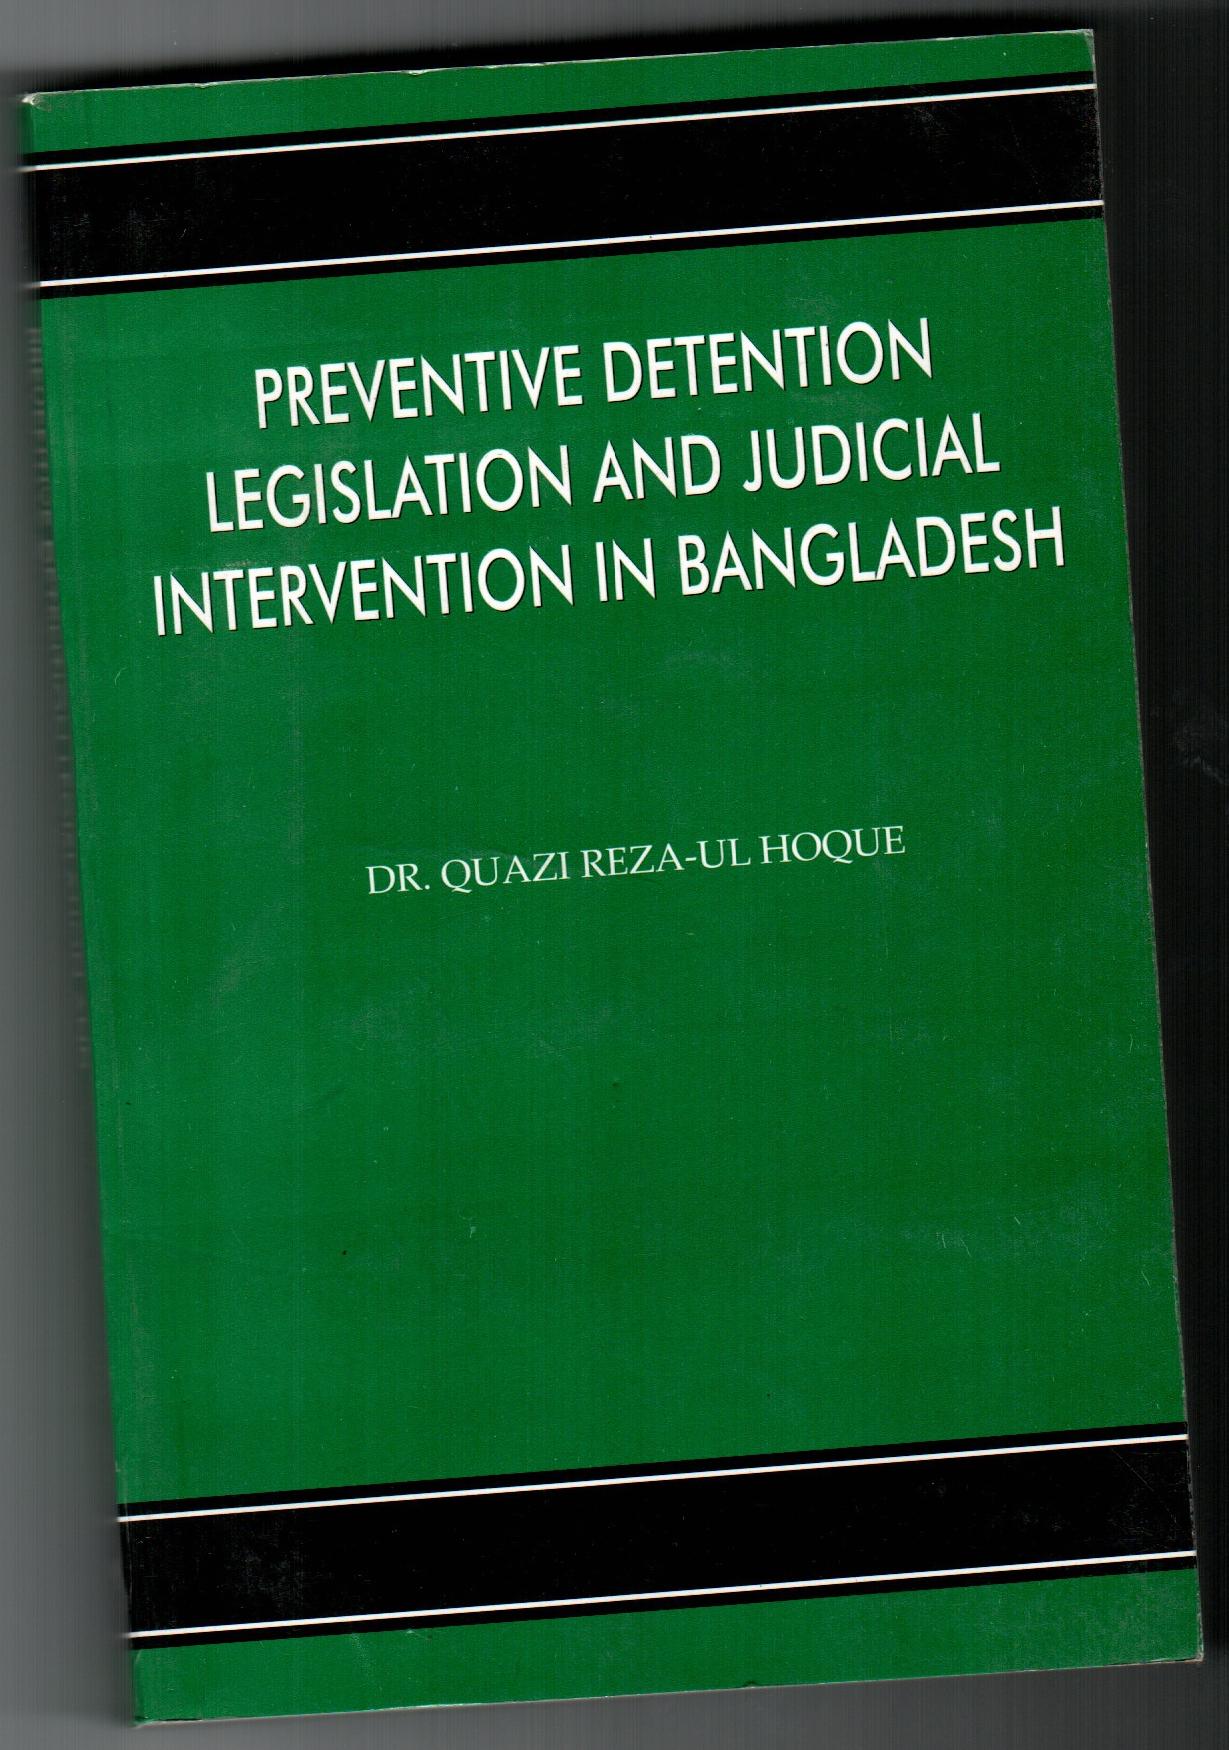 Prevention detention legislation and judicial intervention in Bangladesh